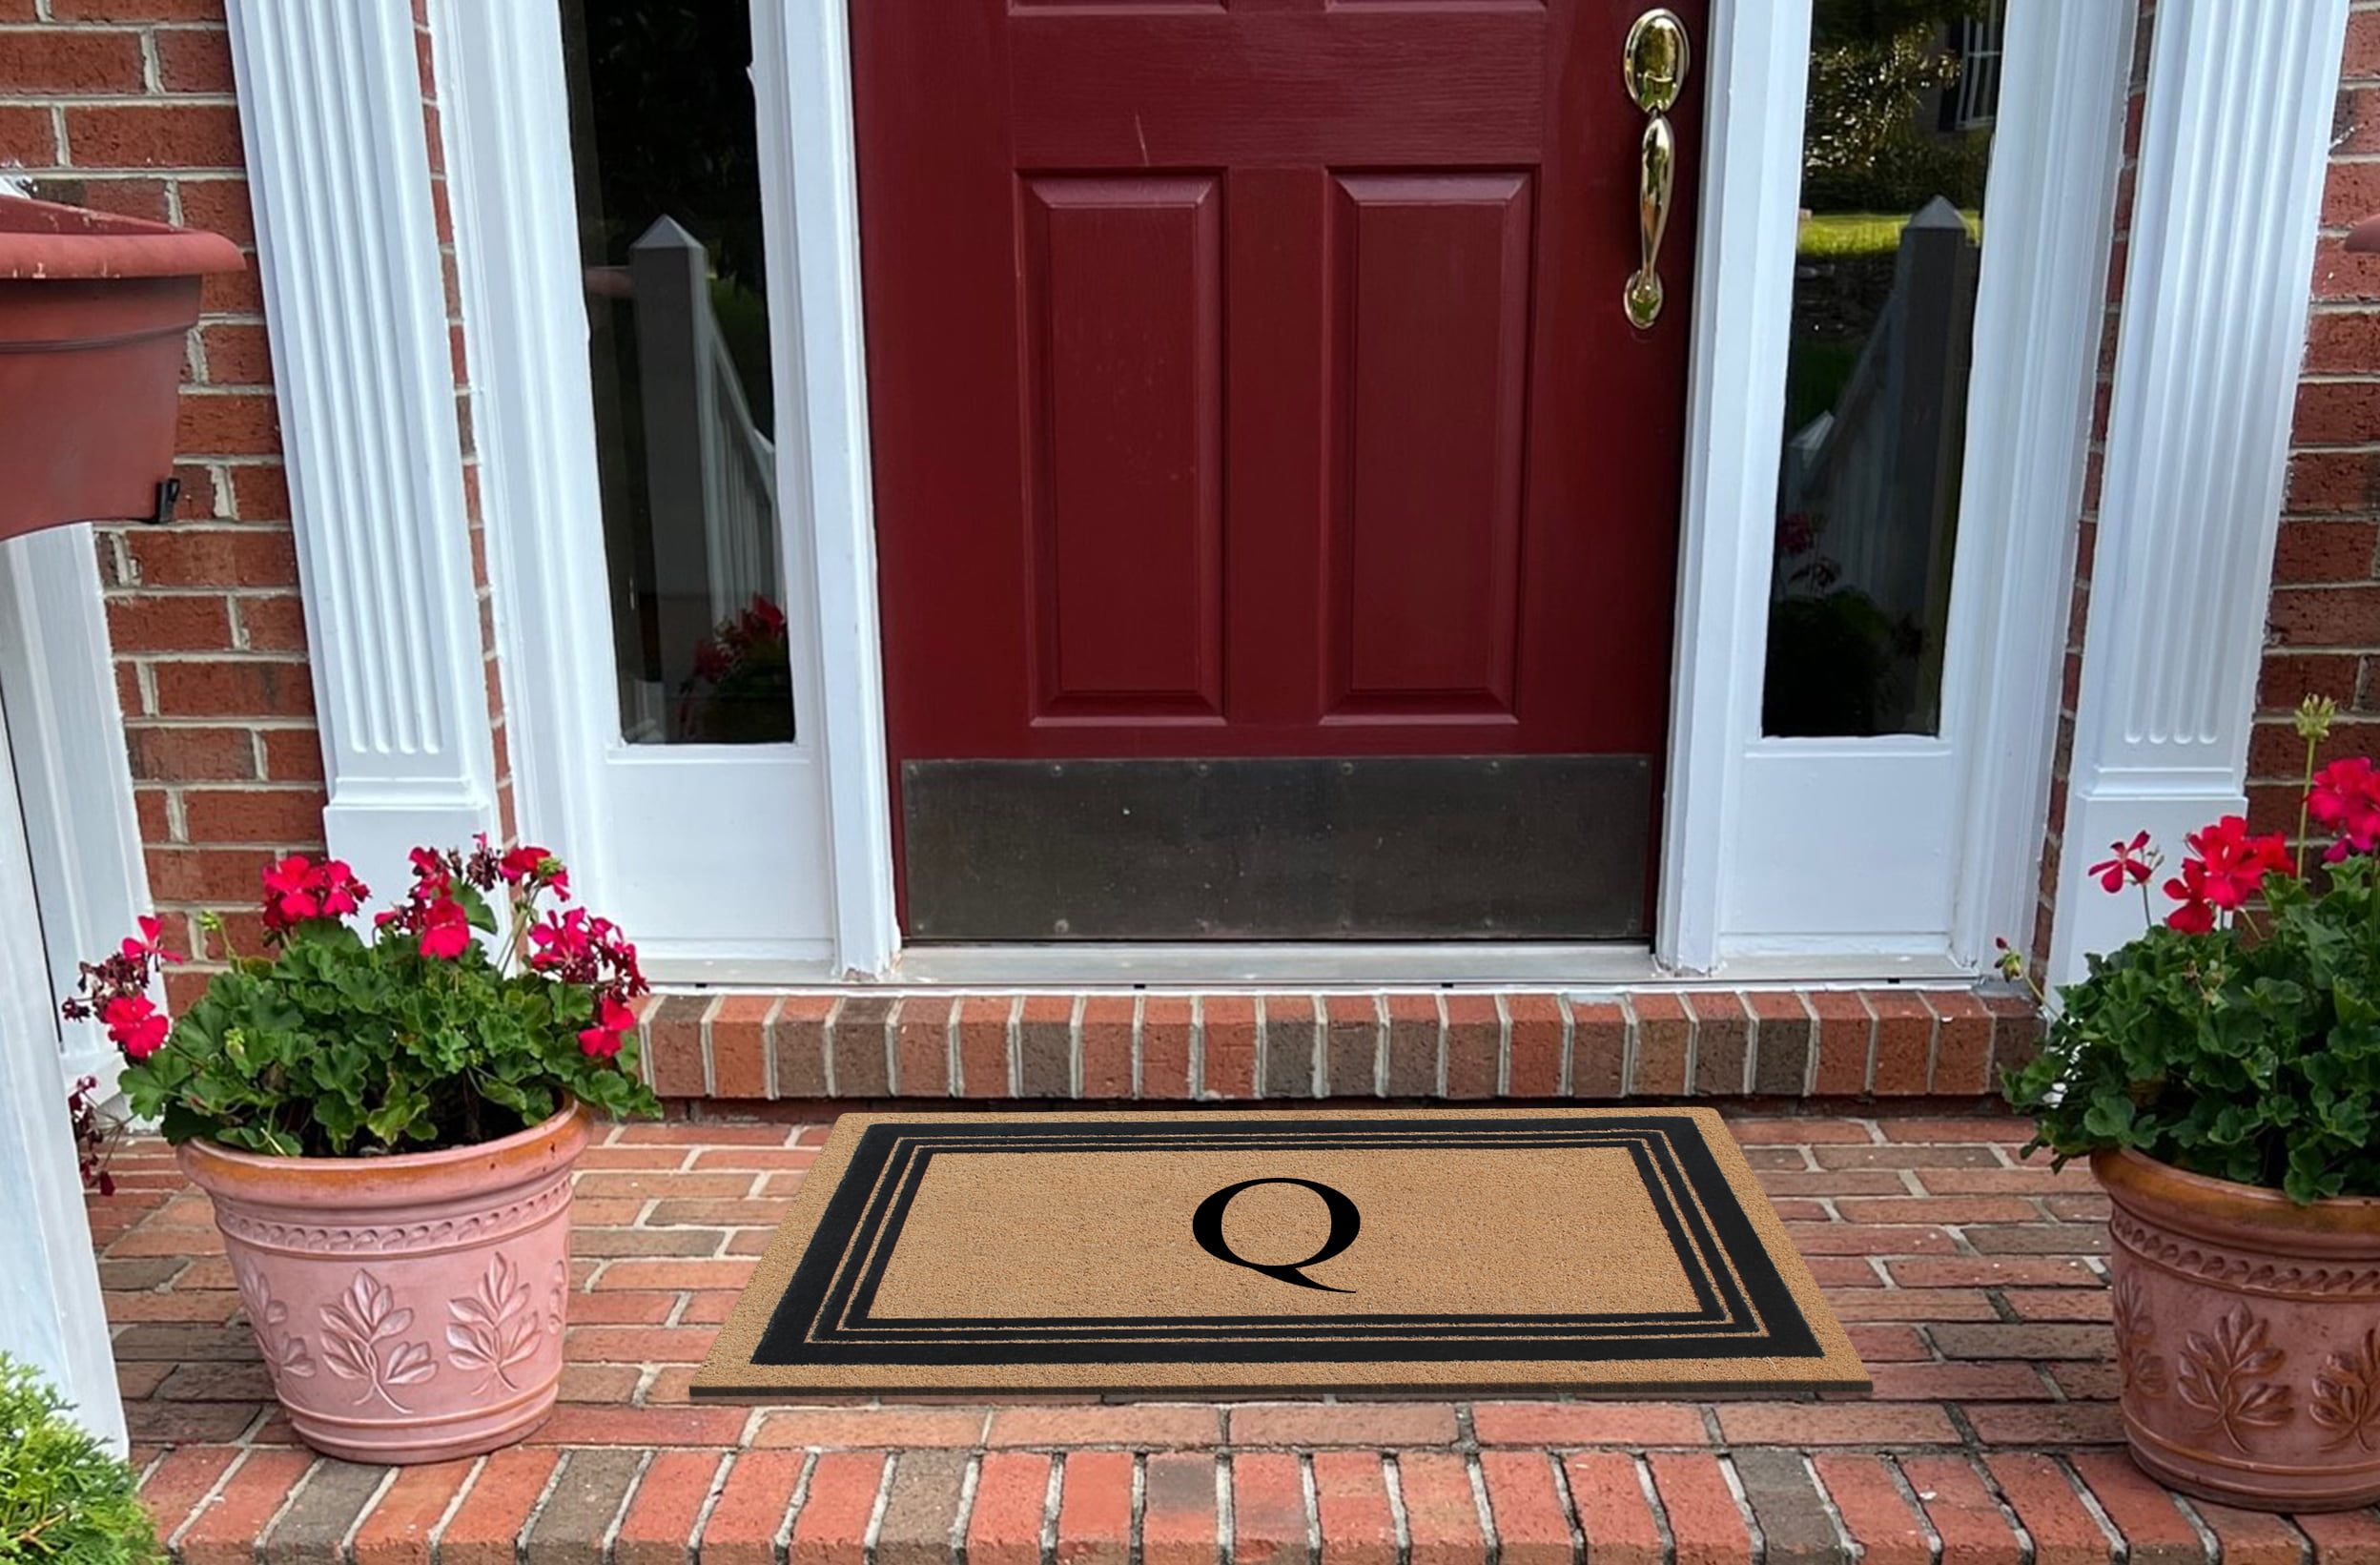 32x47 Front Door Mats Outdoor Indoor-SOCOOL Thick Non Slip Rubber Outdoor  Welcome Mat Rug Outdoor Door mats For Outside Inside Entry Home Entrance -  Burgundy Flower,DM2426H 